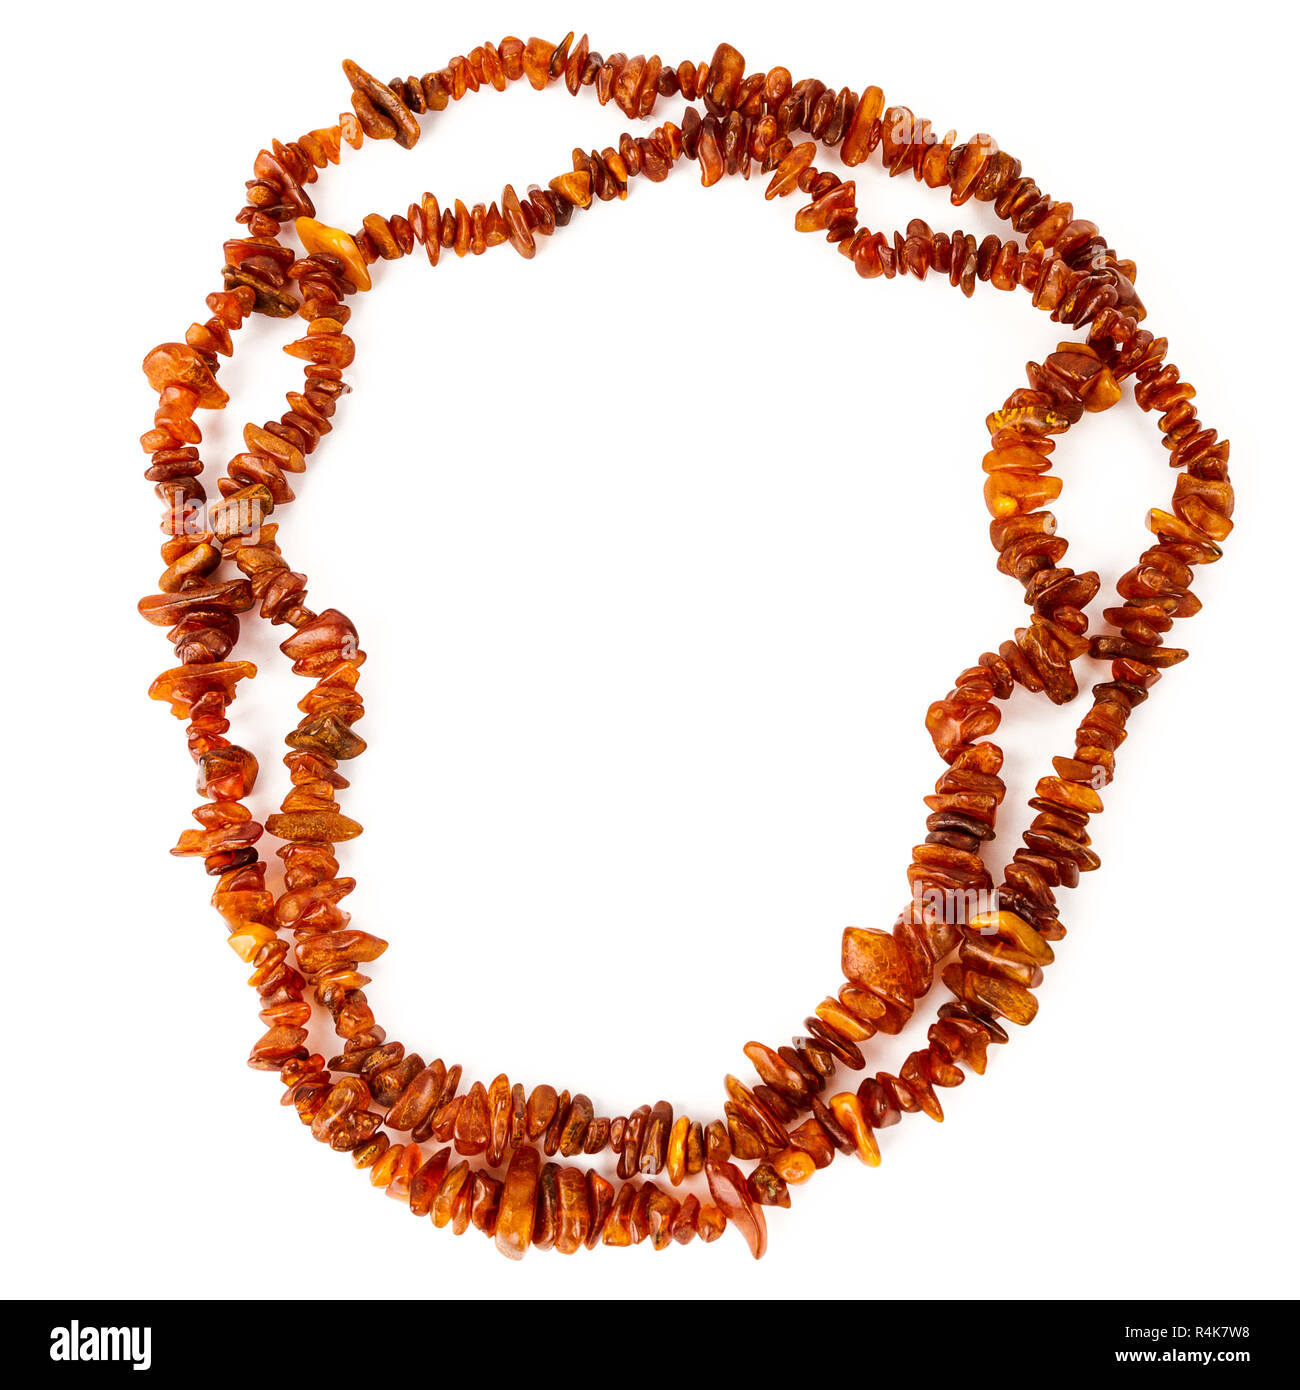 string of beads (17x = .10a): 16 amber beads, 1 millefiori bead